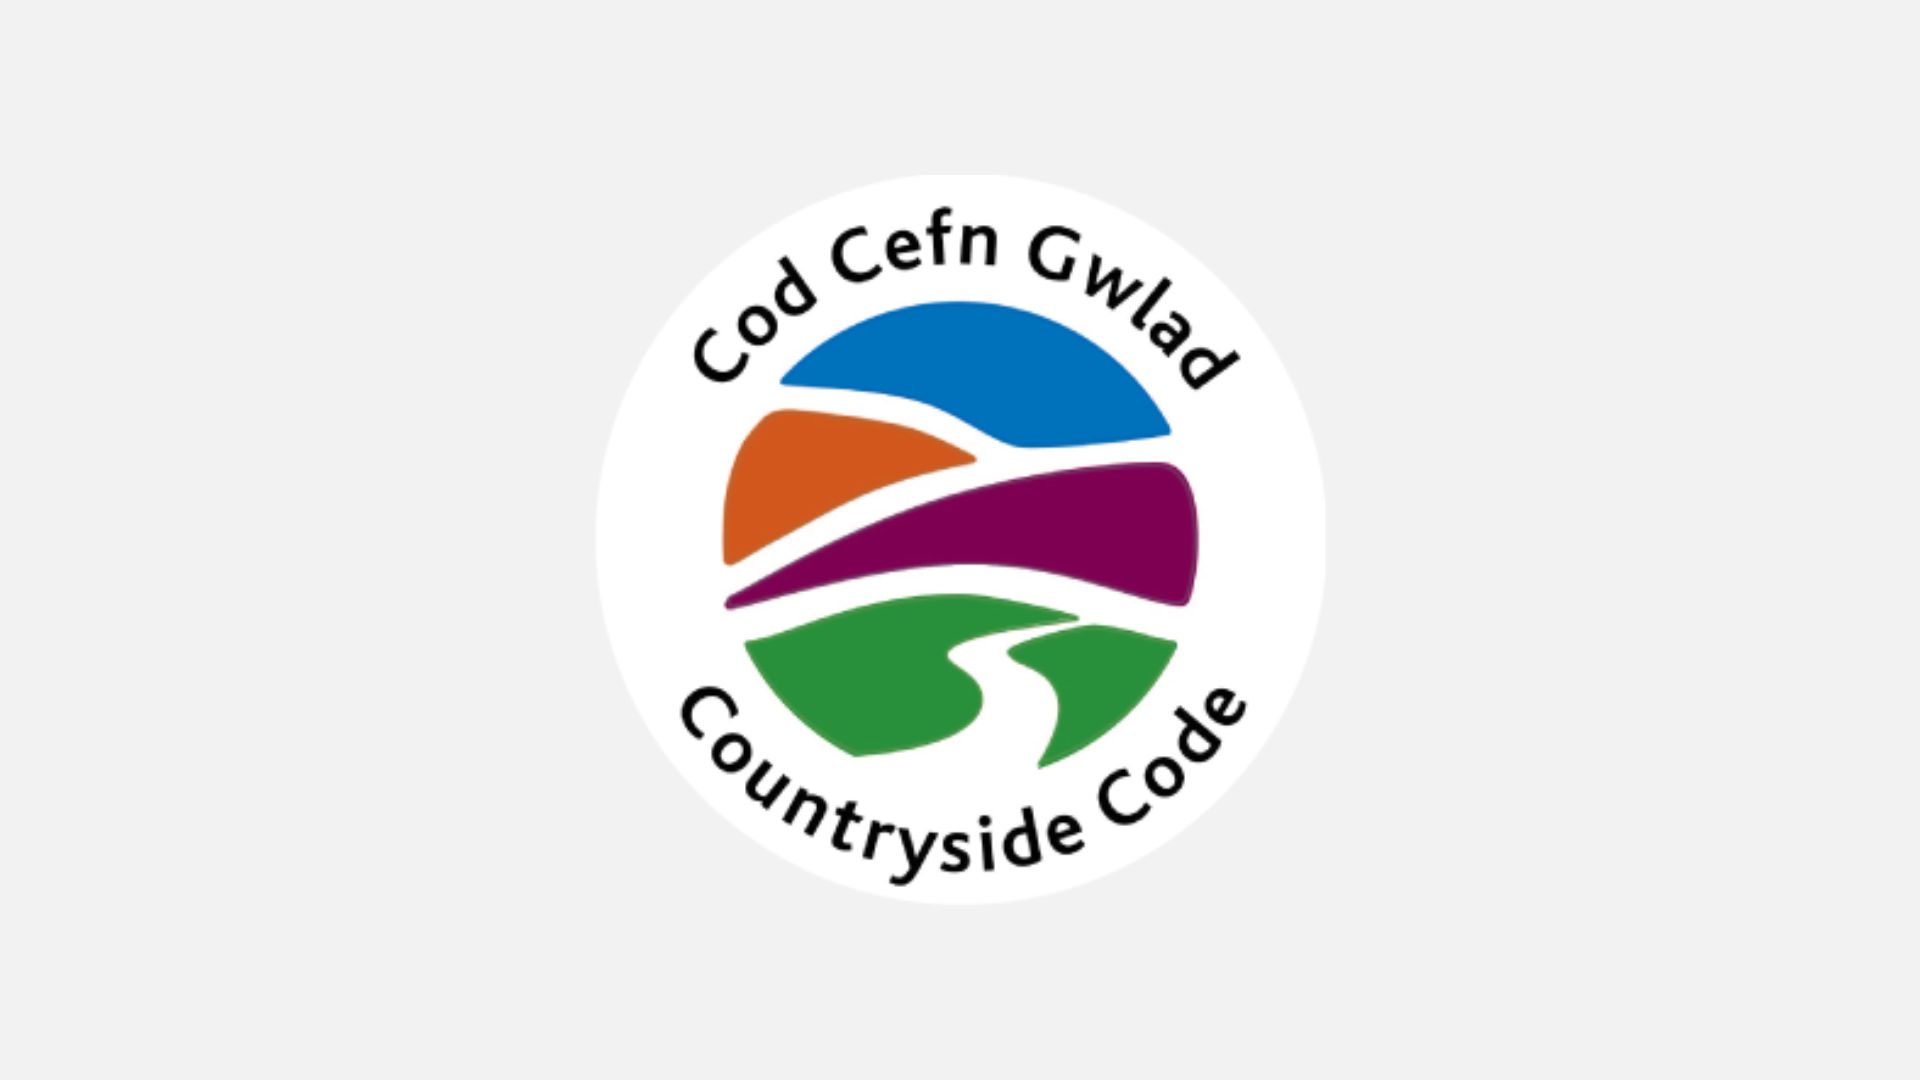 Countryside Code logo.